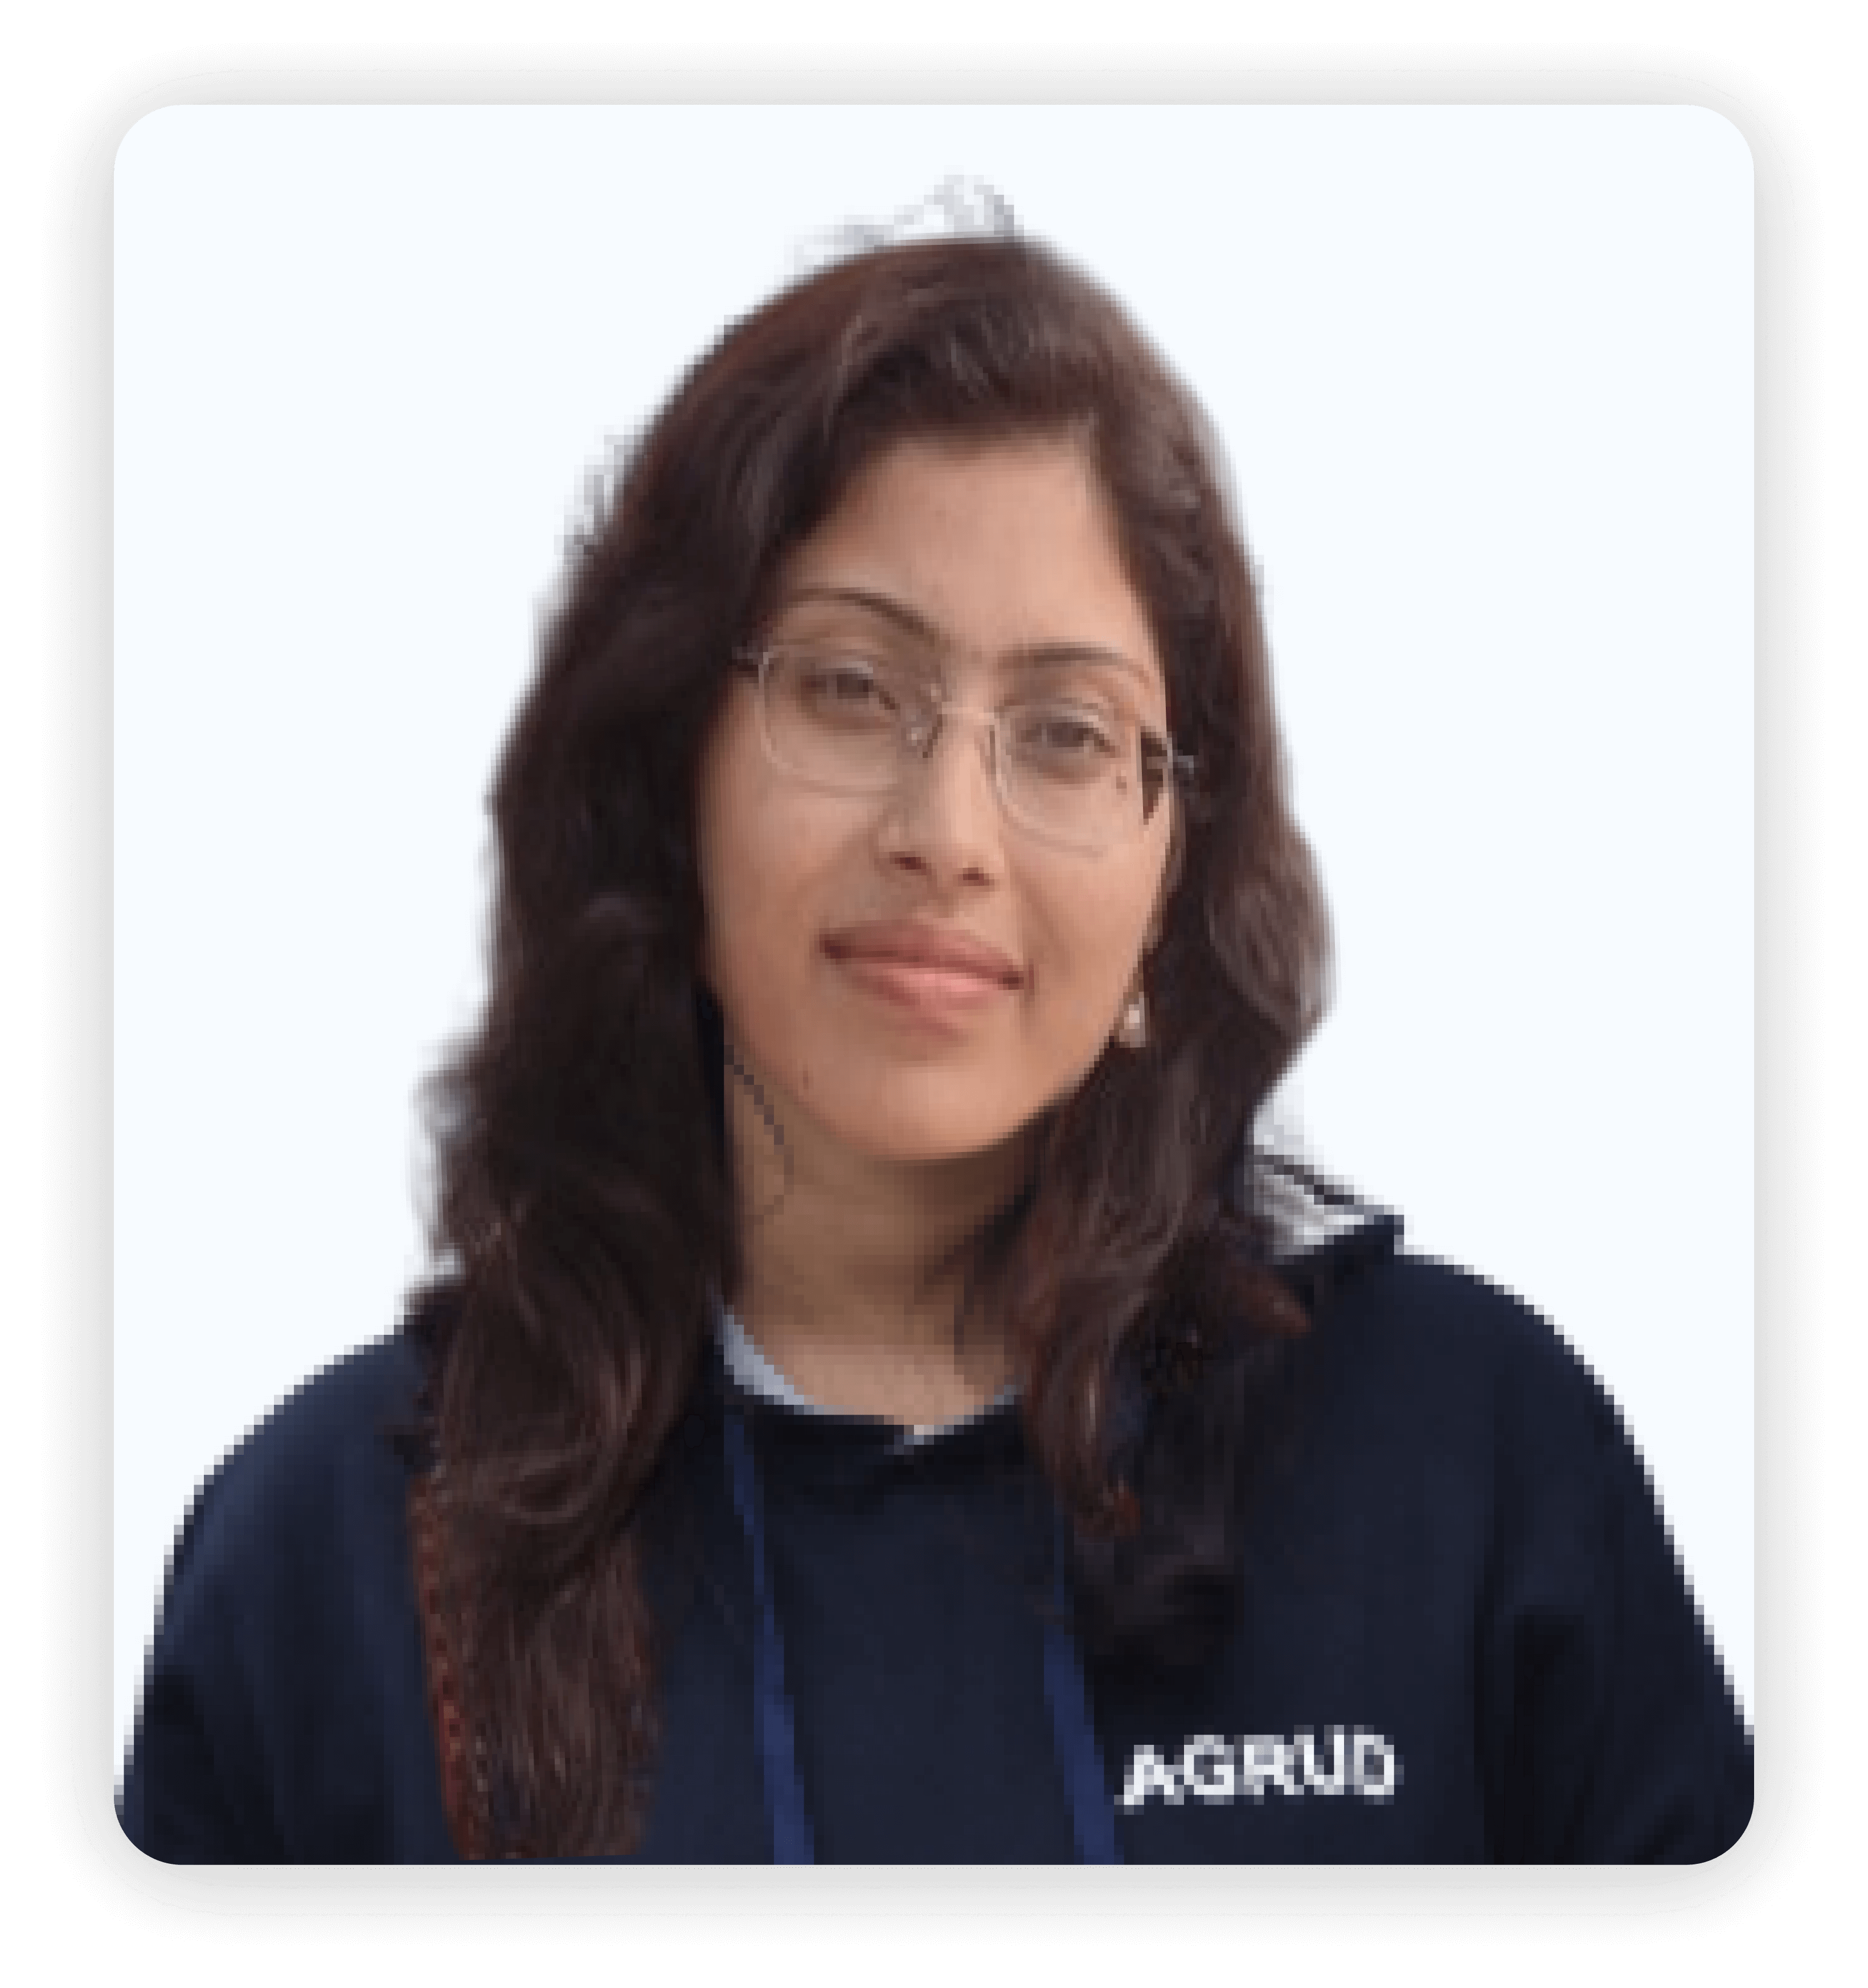 Pratyusa Banerjee - Software Developer at Agrud Technologies